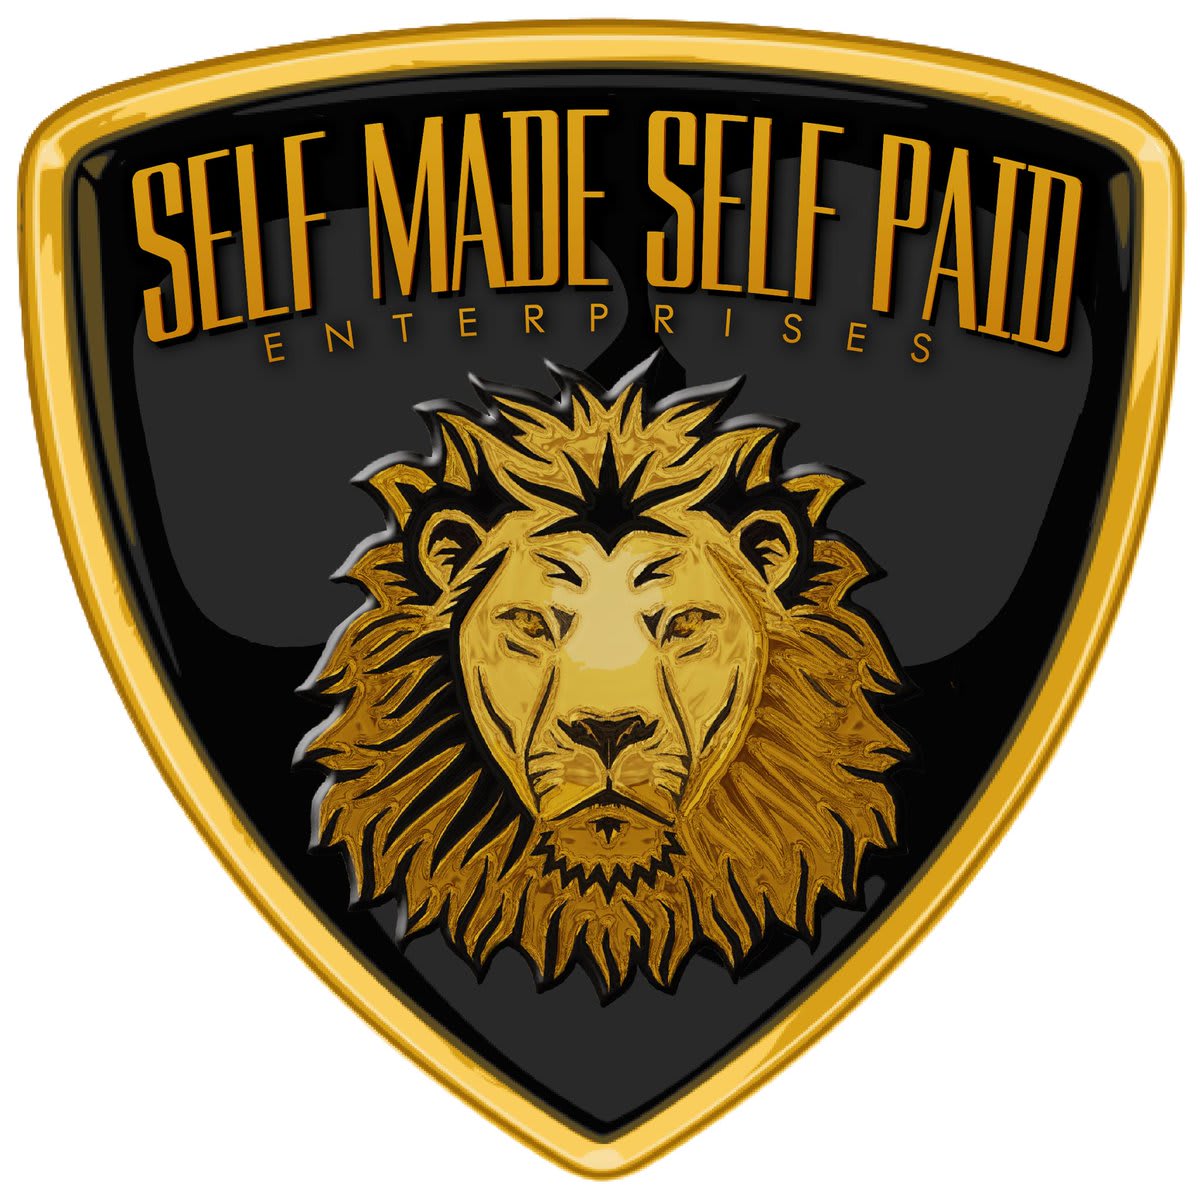 Selfmade Selfpaid Enterprise